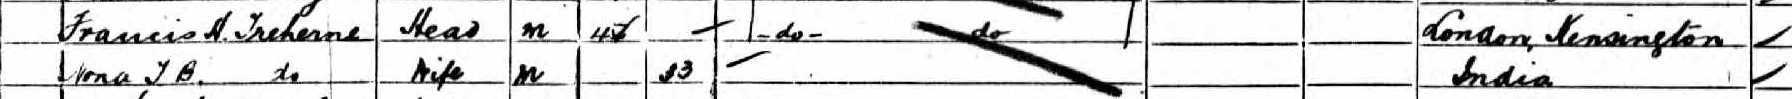 1901 Census Col Treherne at Netley Hospital